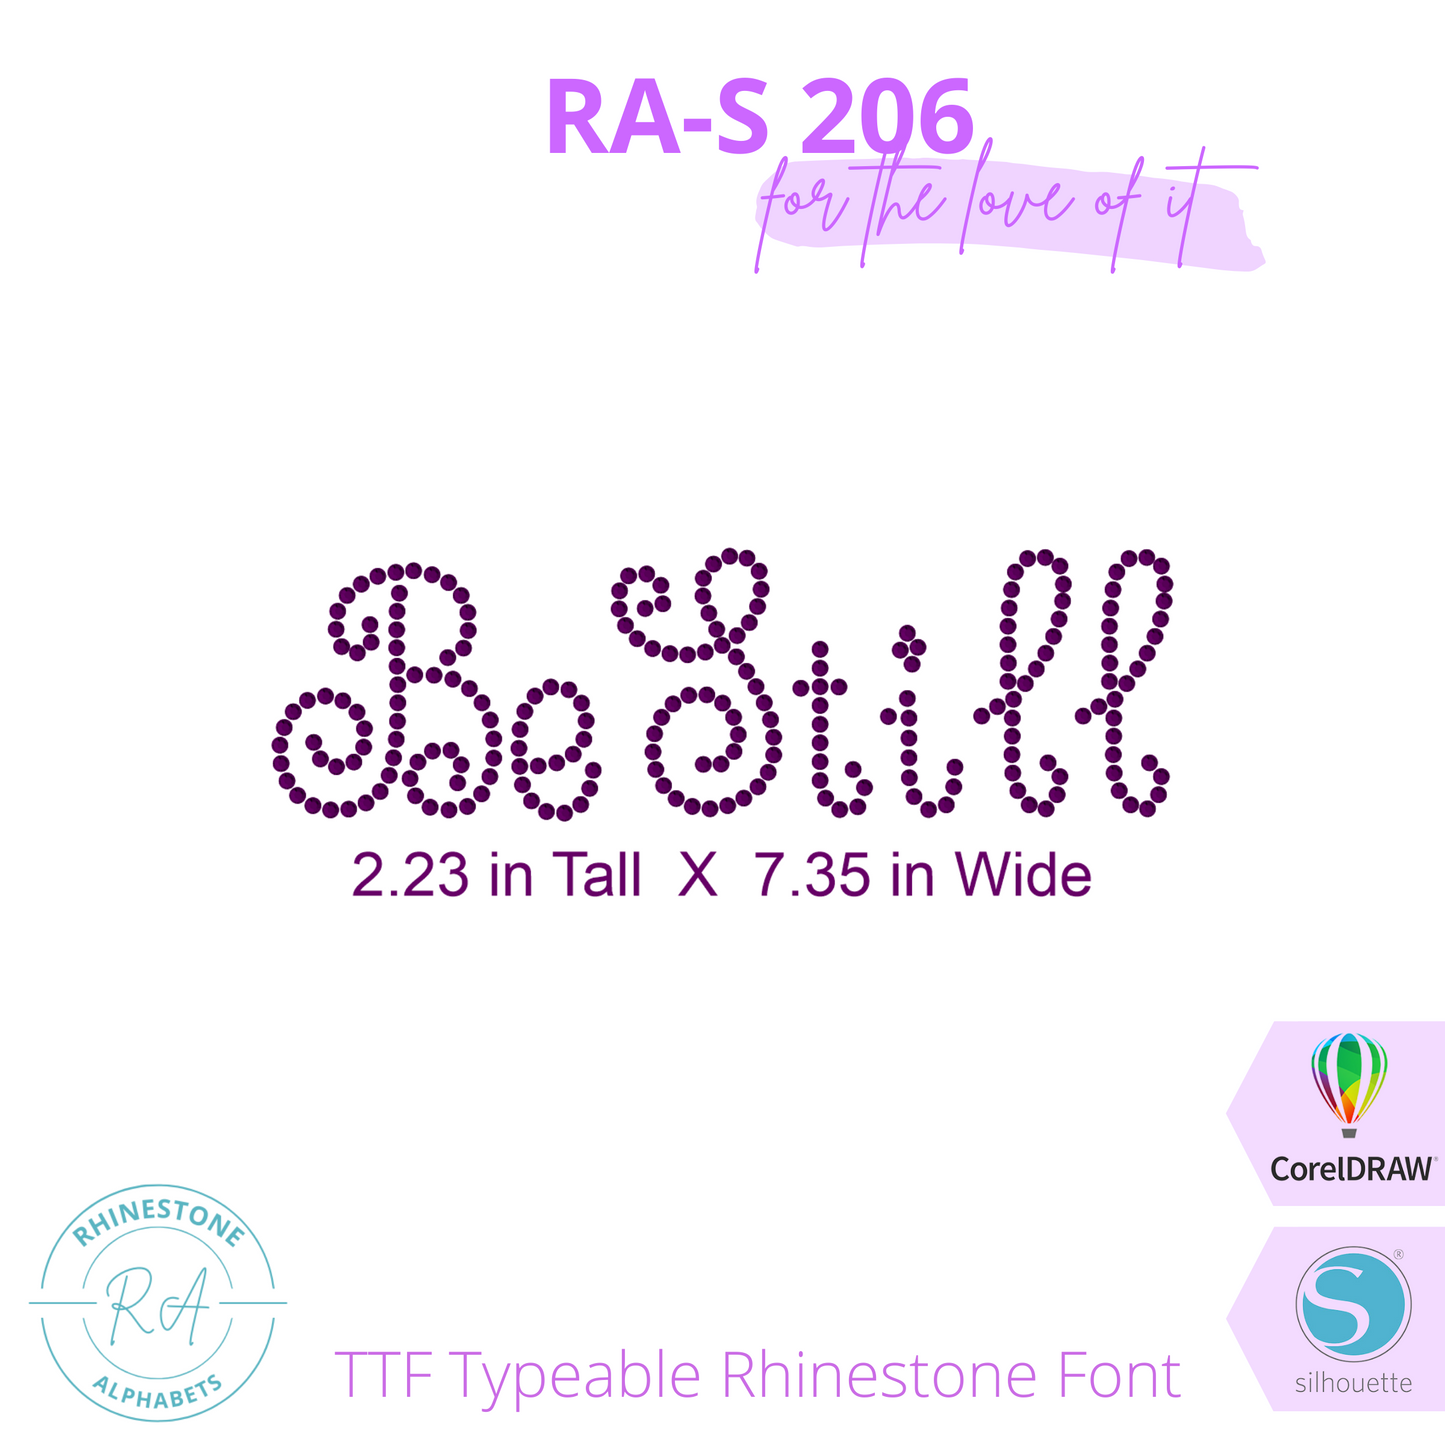 RA-S 206 - RhinestoneAlphabets